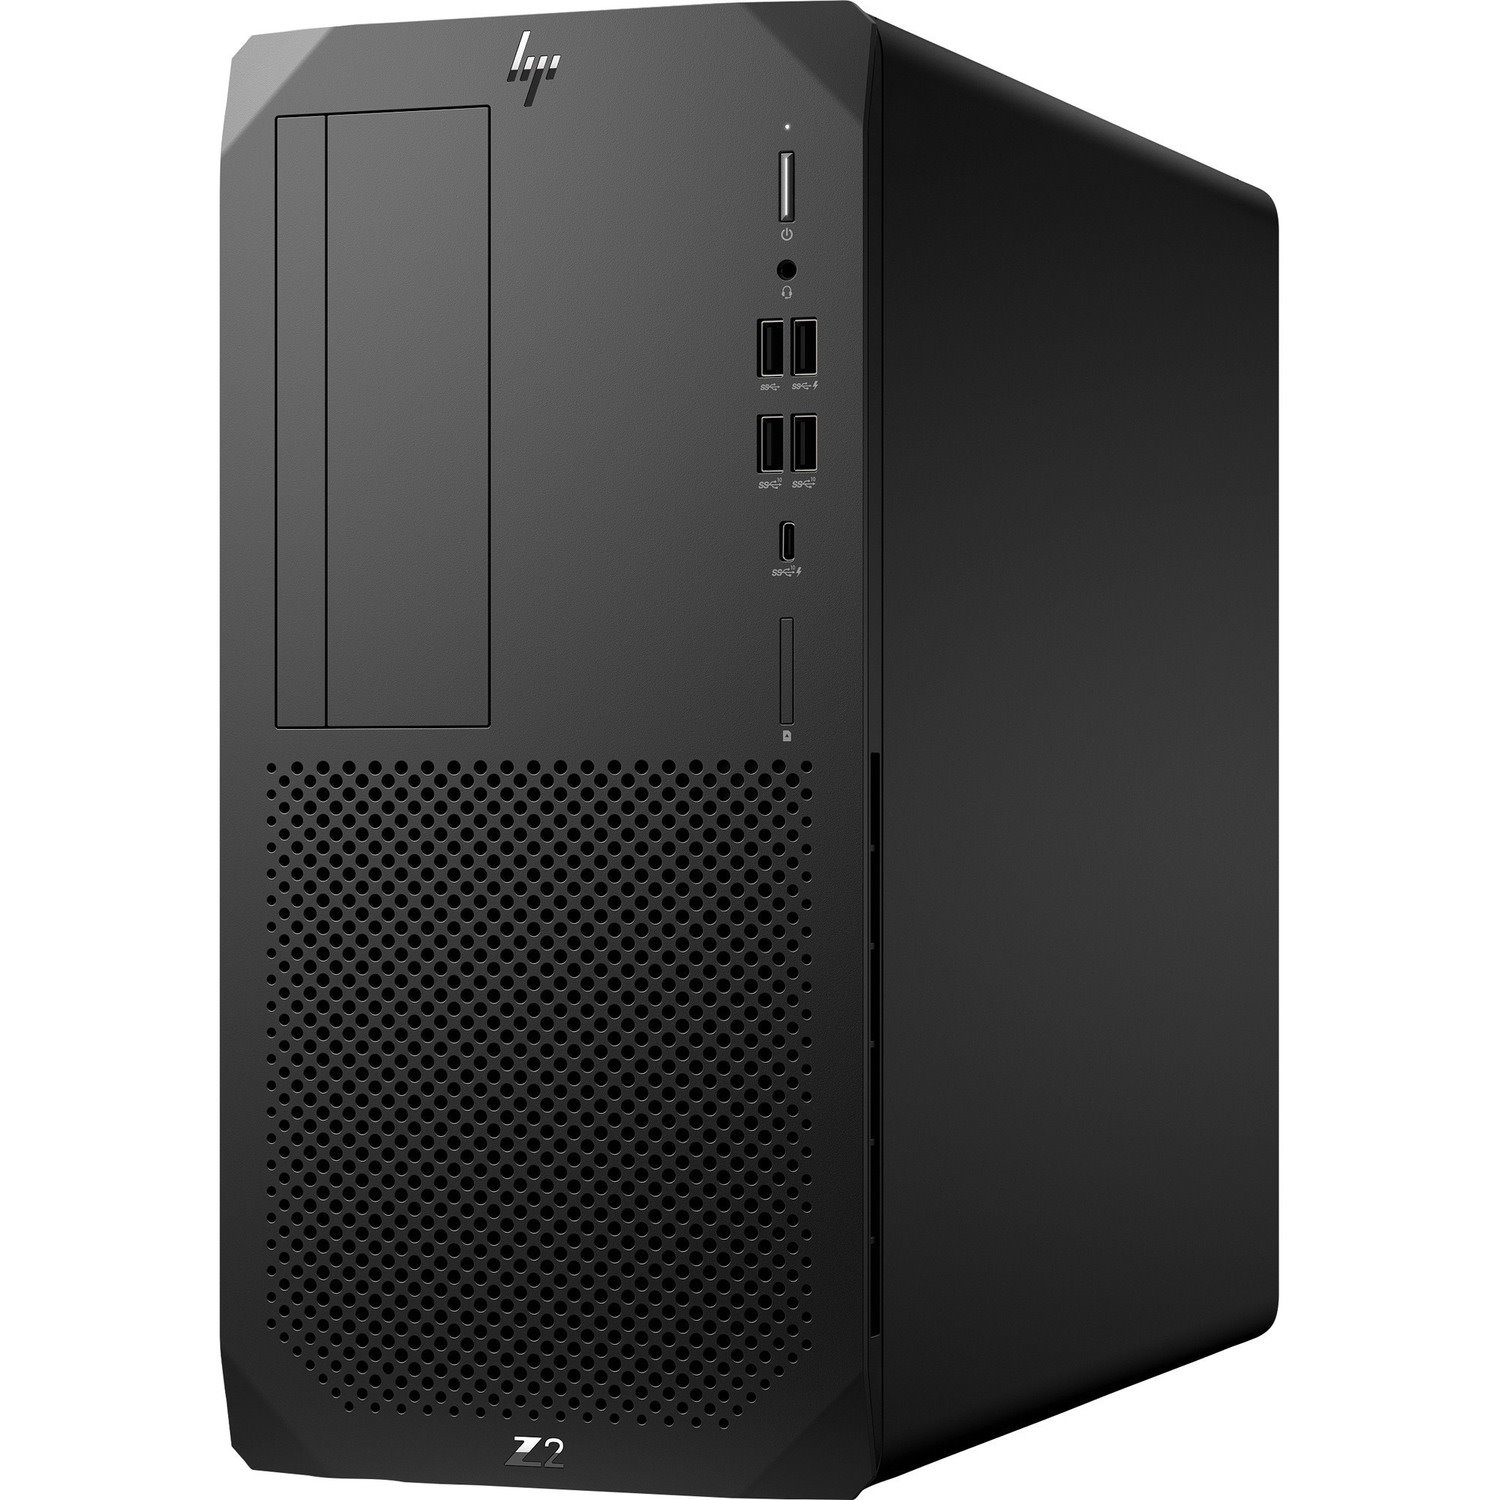 HP Z2 G5 Workstation - 1 x Intel Core i9 10th Gen i9-10900K - 64 GB - Tower - Black